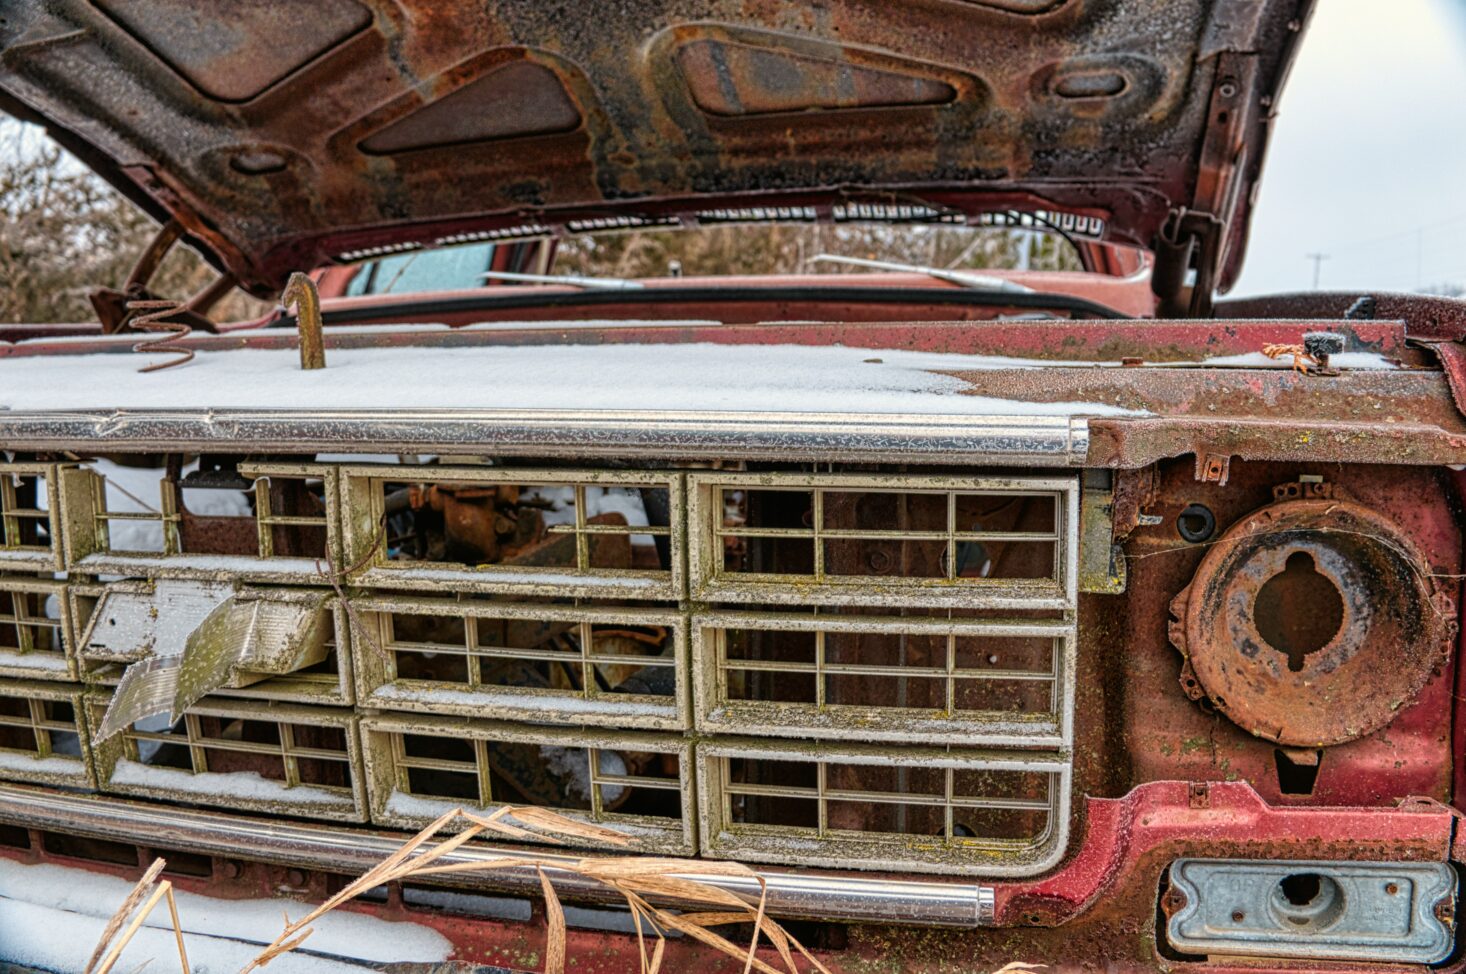 hood open on a rusty used truck